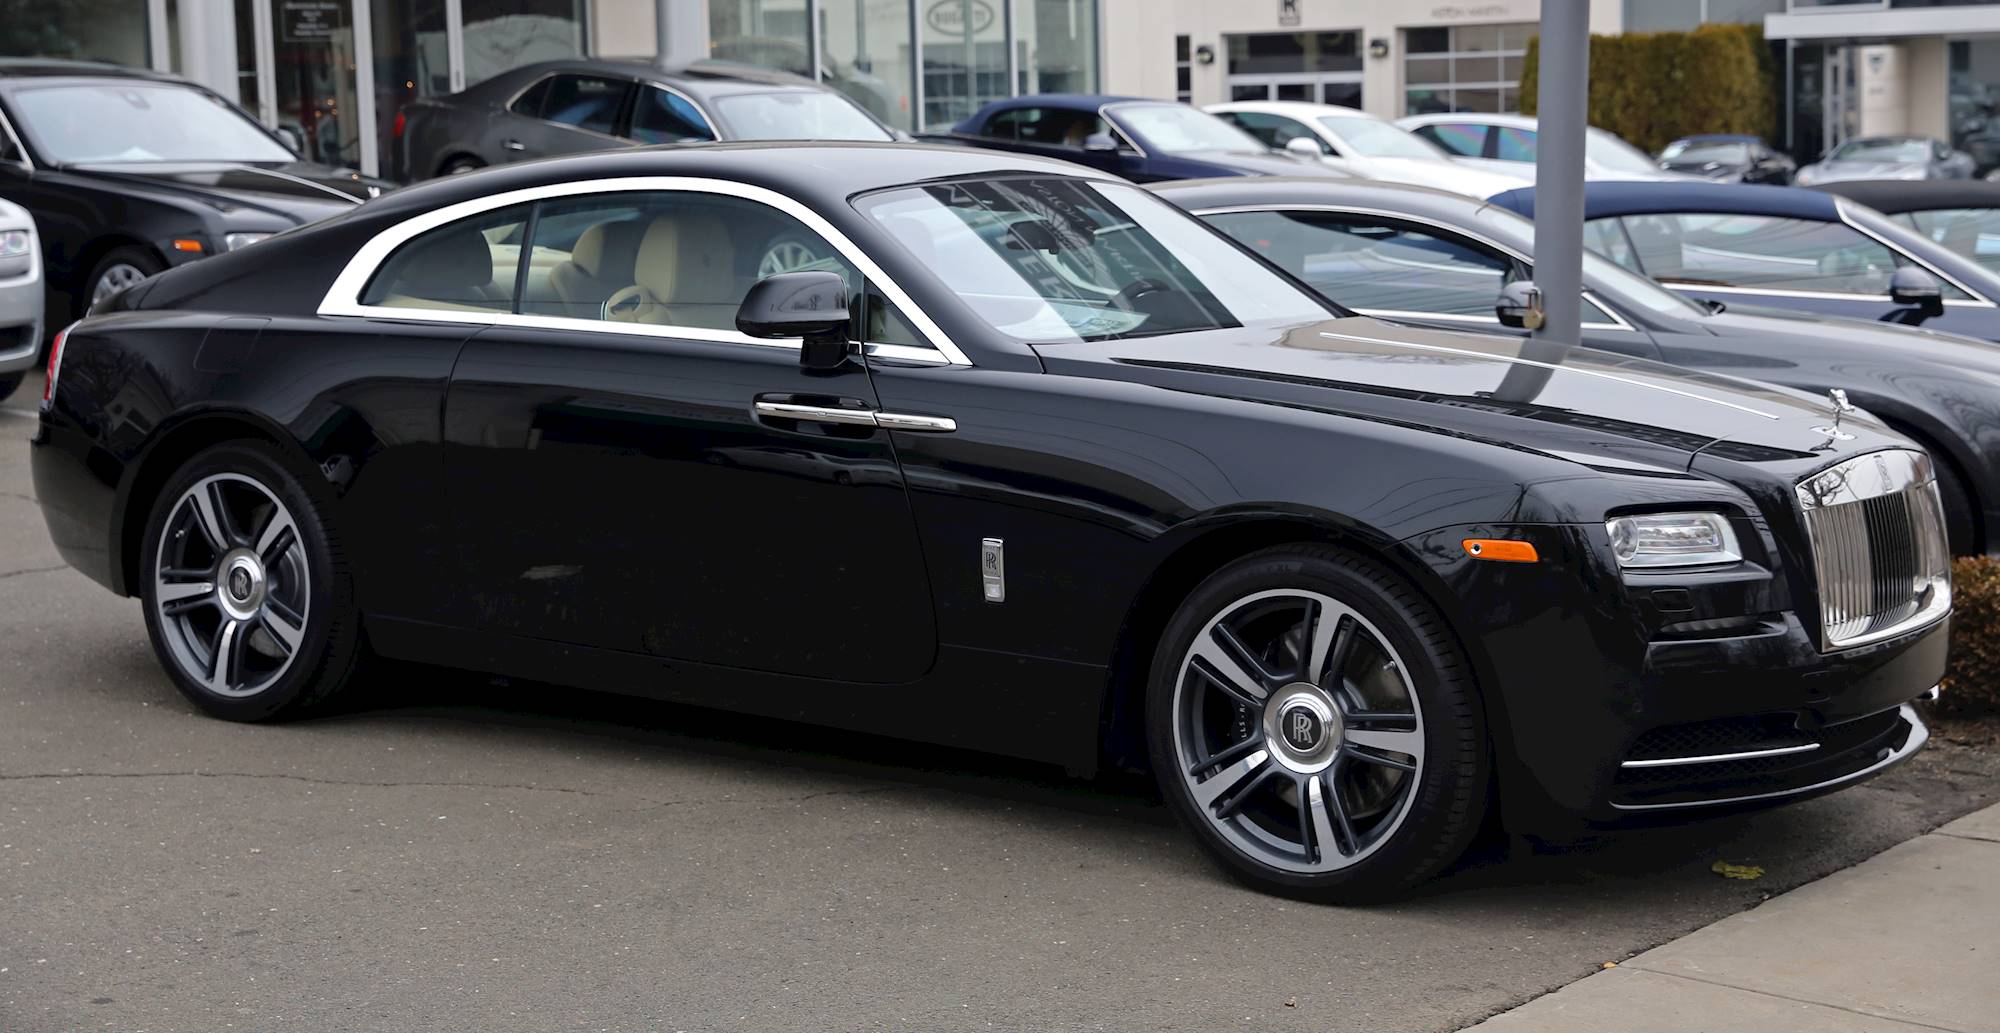 Black Rolls-Royce Wraith 2014